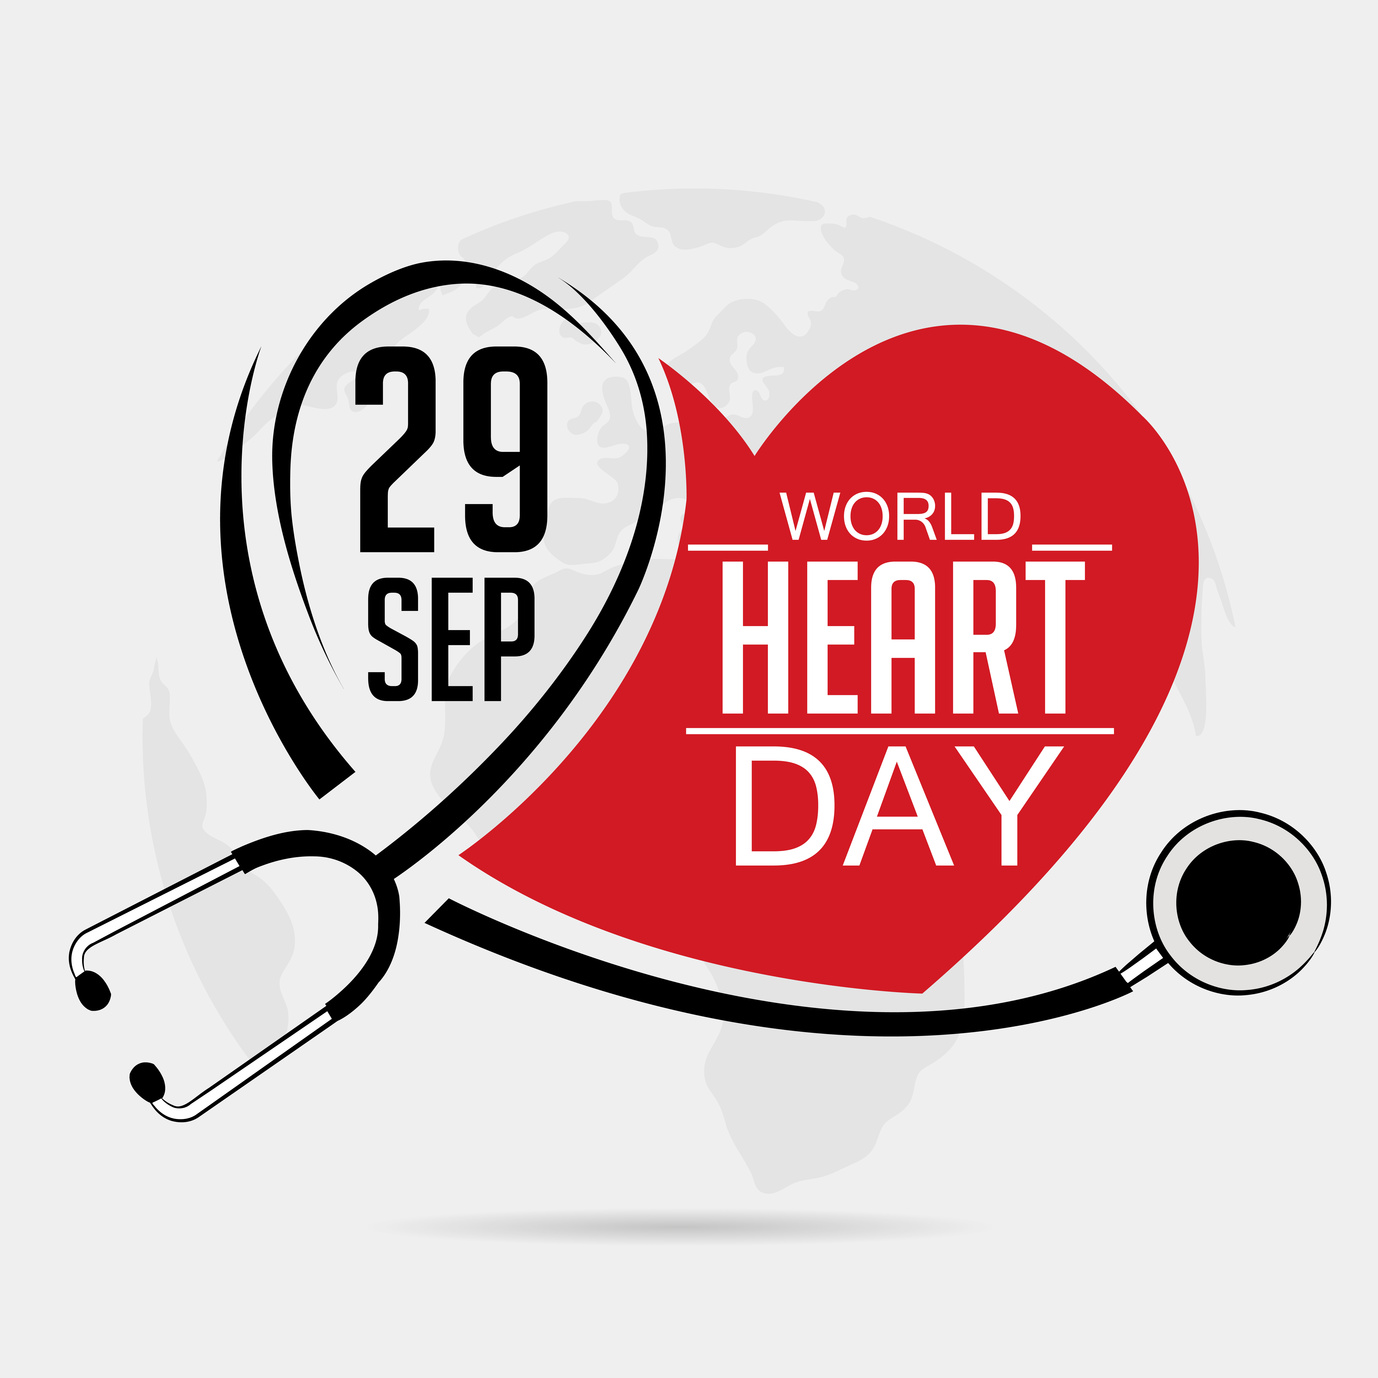 world-heart-day-2019.jpg